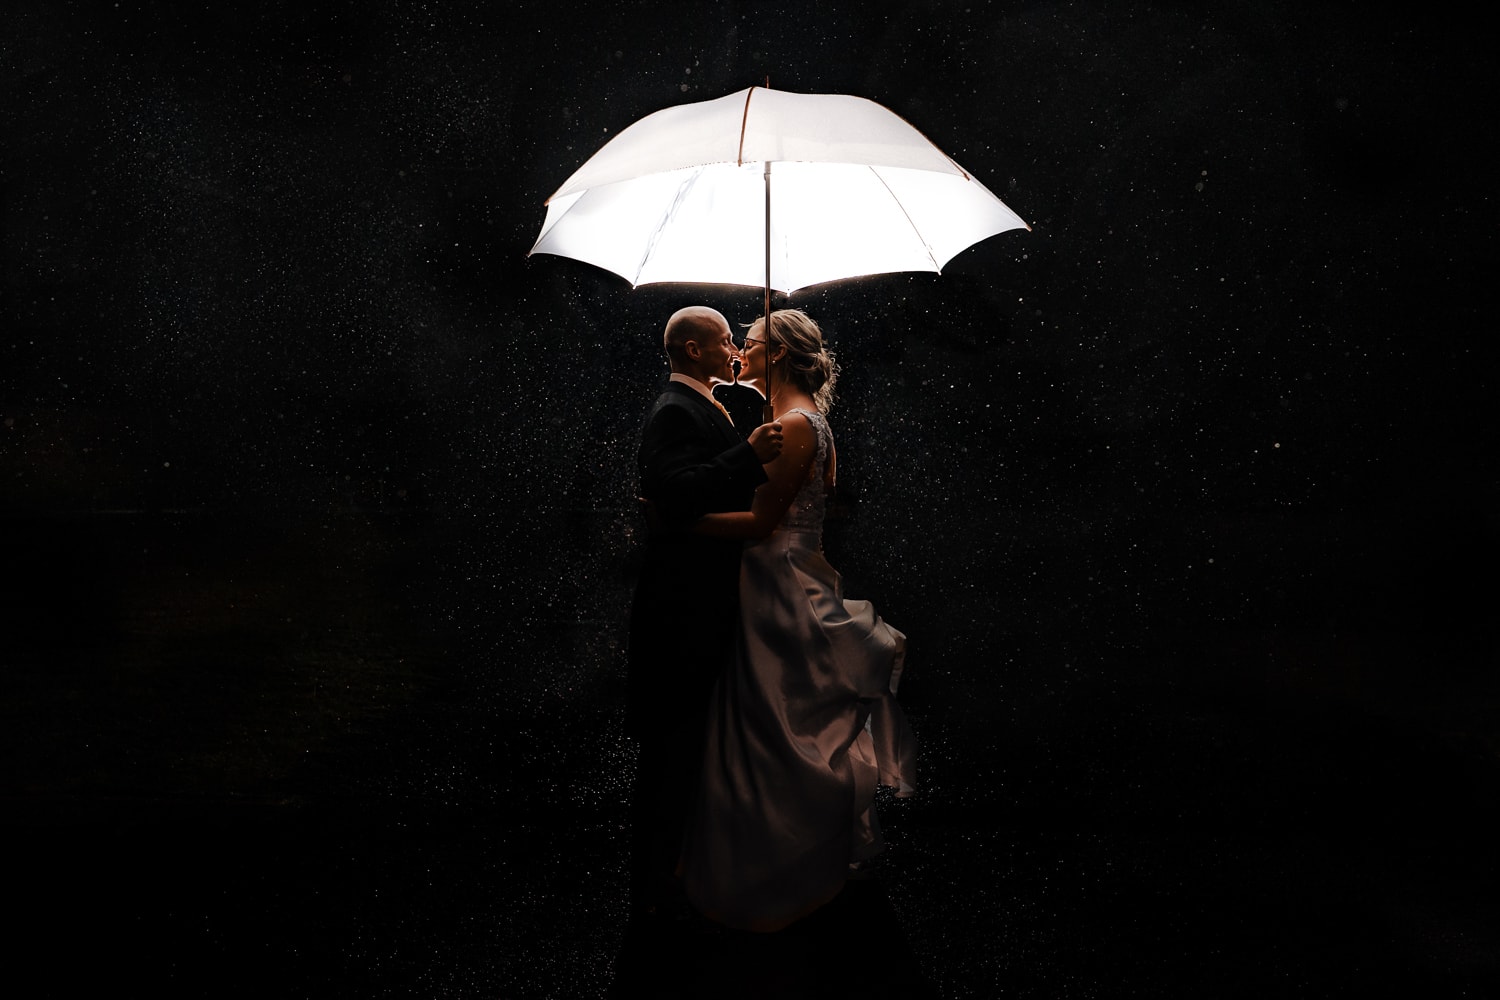 bride and groom creative night portrait in the rain